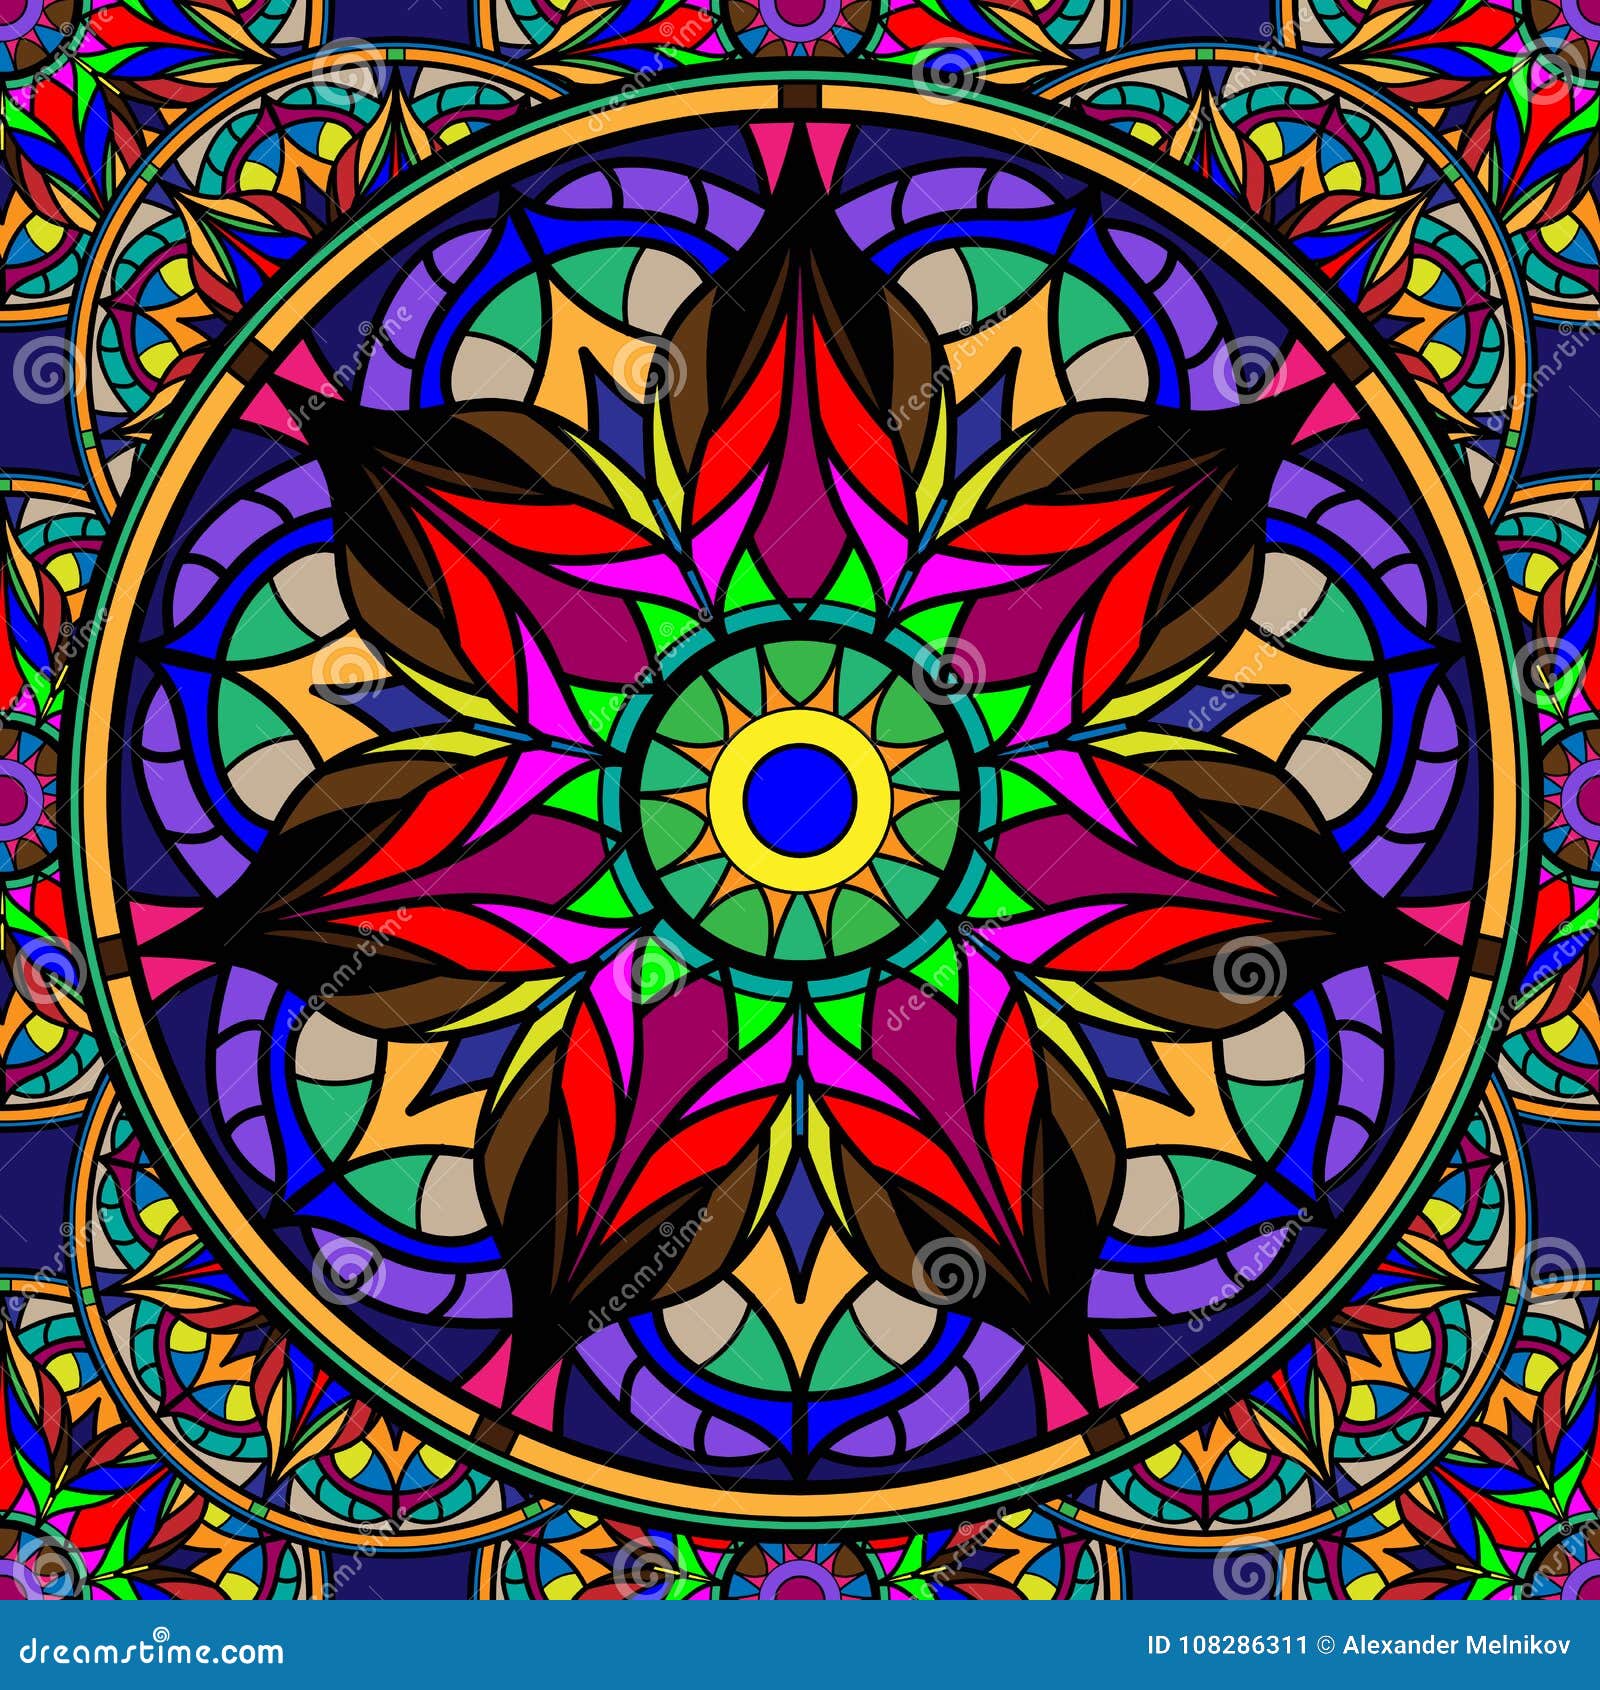 Demostrar Reclamación espiritual Modelo De Repetición Inconsútil De Mandalas Coloreadas Ilustración del  Vector - Ilustración de extensible, estilo: 108286311